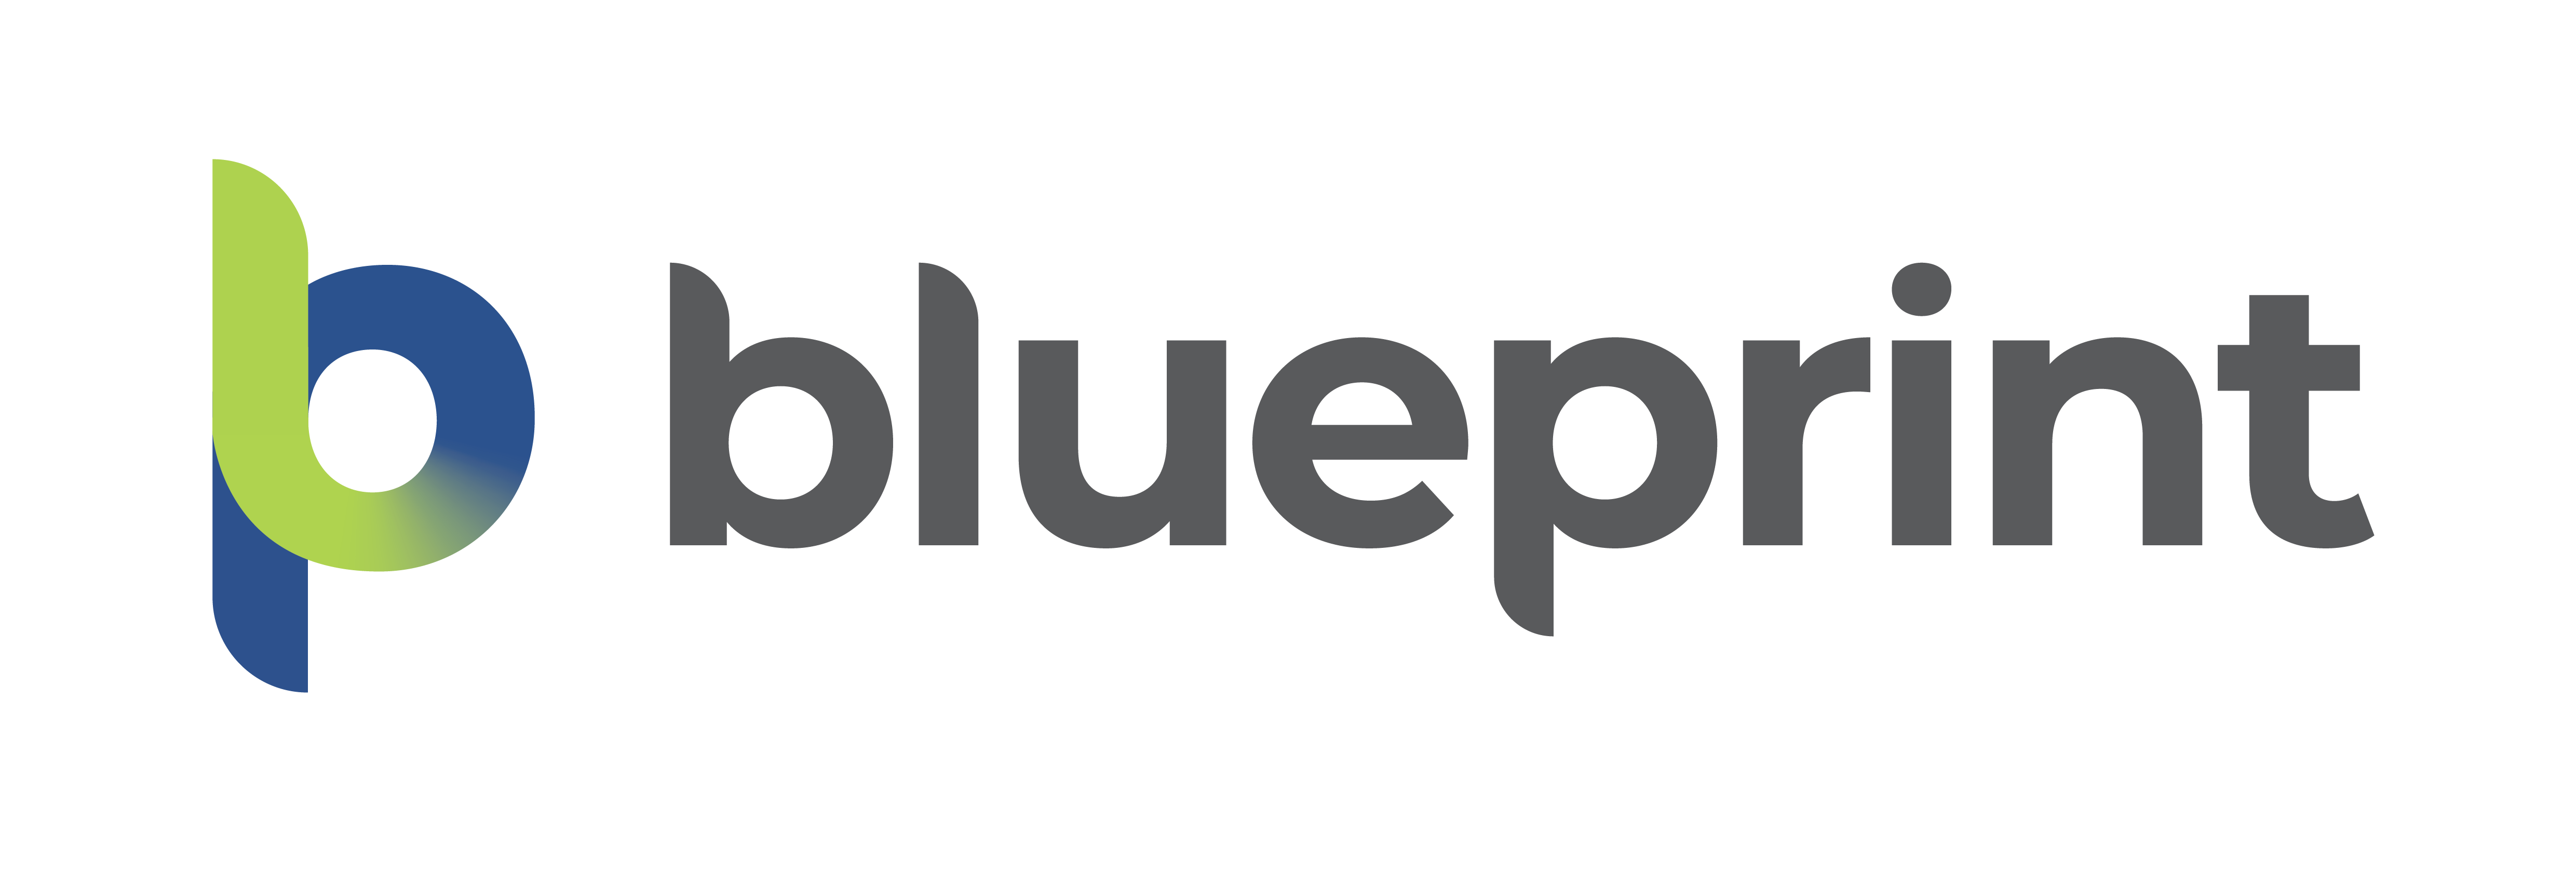 Blueprint Document Solutions Ltd